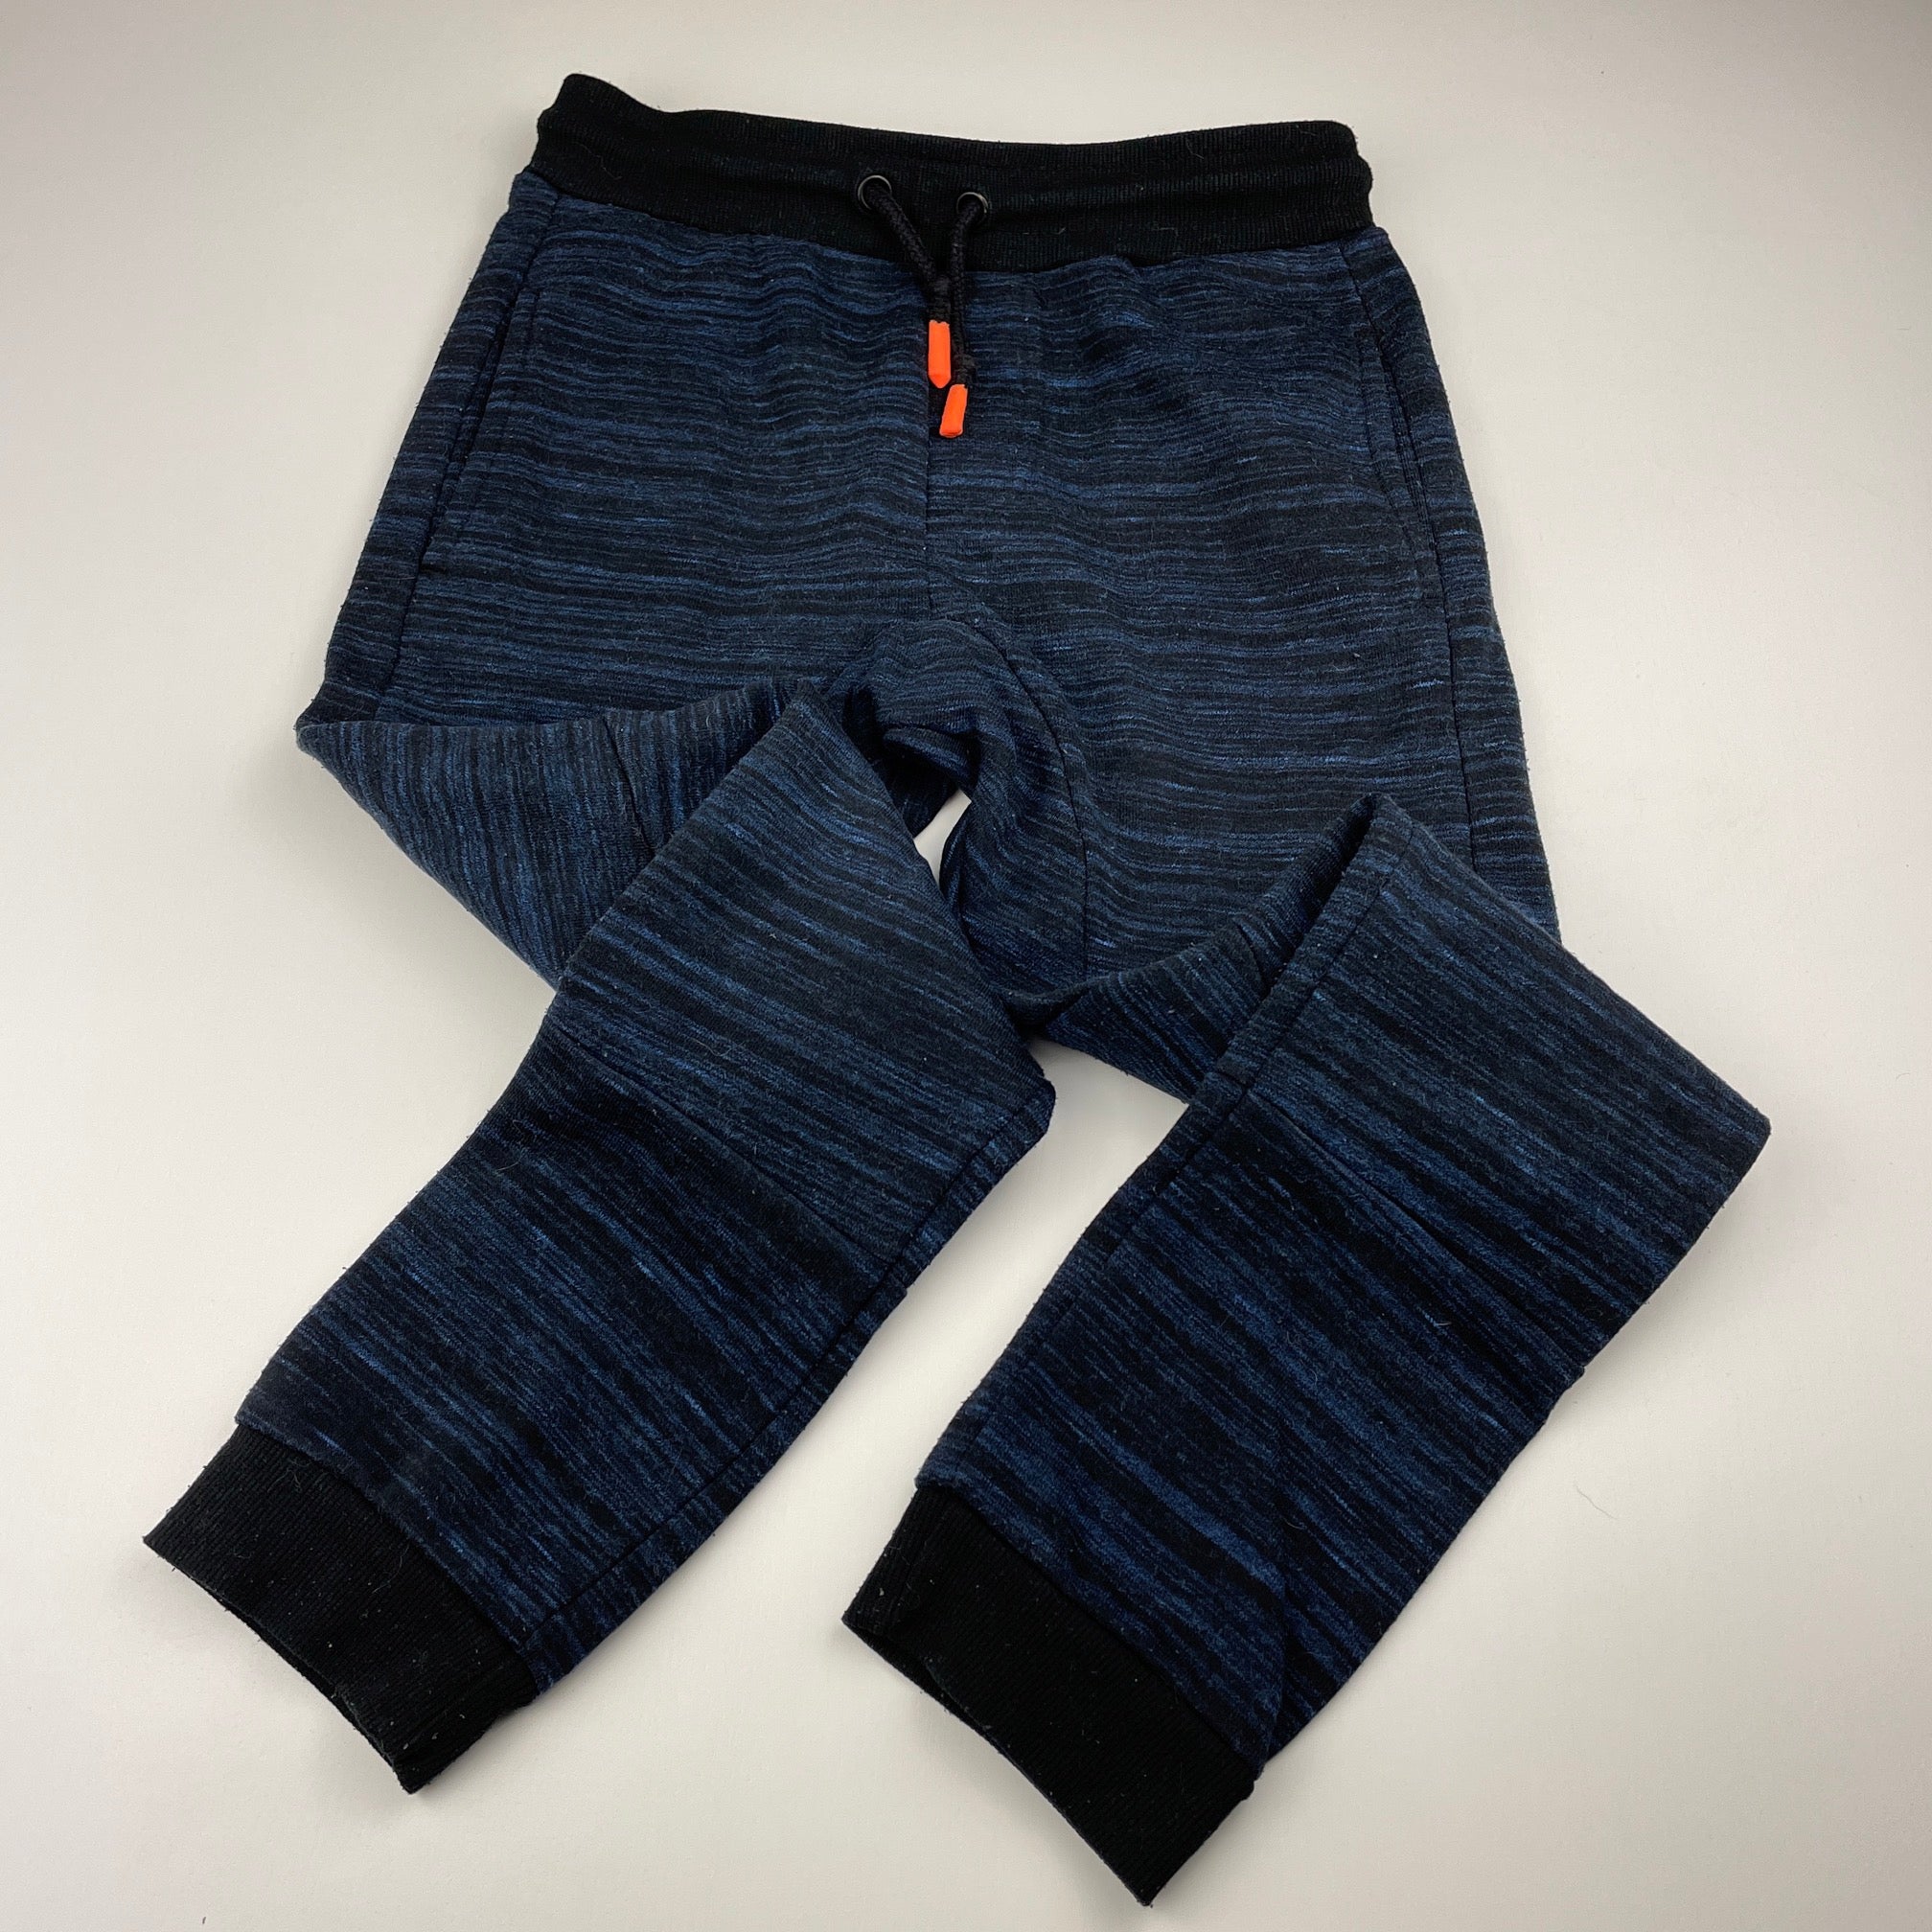 Plus Size Winter Fleece Track Pants For Women - Navy Blue, Sports Lower,  Sports Tack Pant, Lower Pants, Running Pants, ट्रैक पैंट - Tanya  Enterprises, Ludhiana | ID: 2852249857473